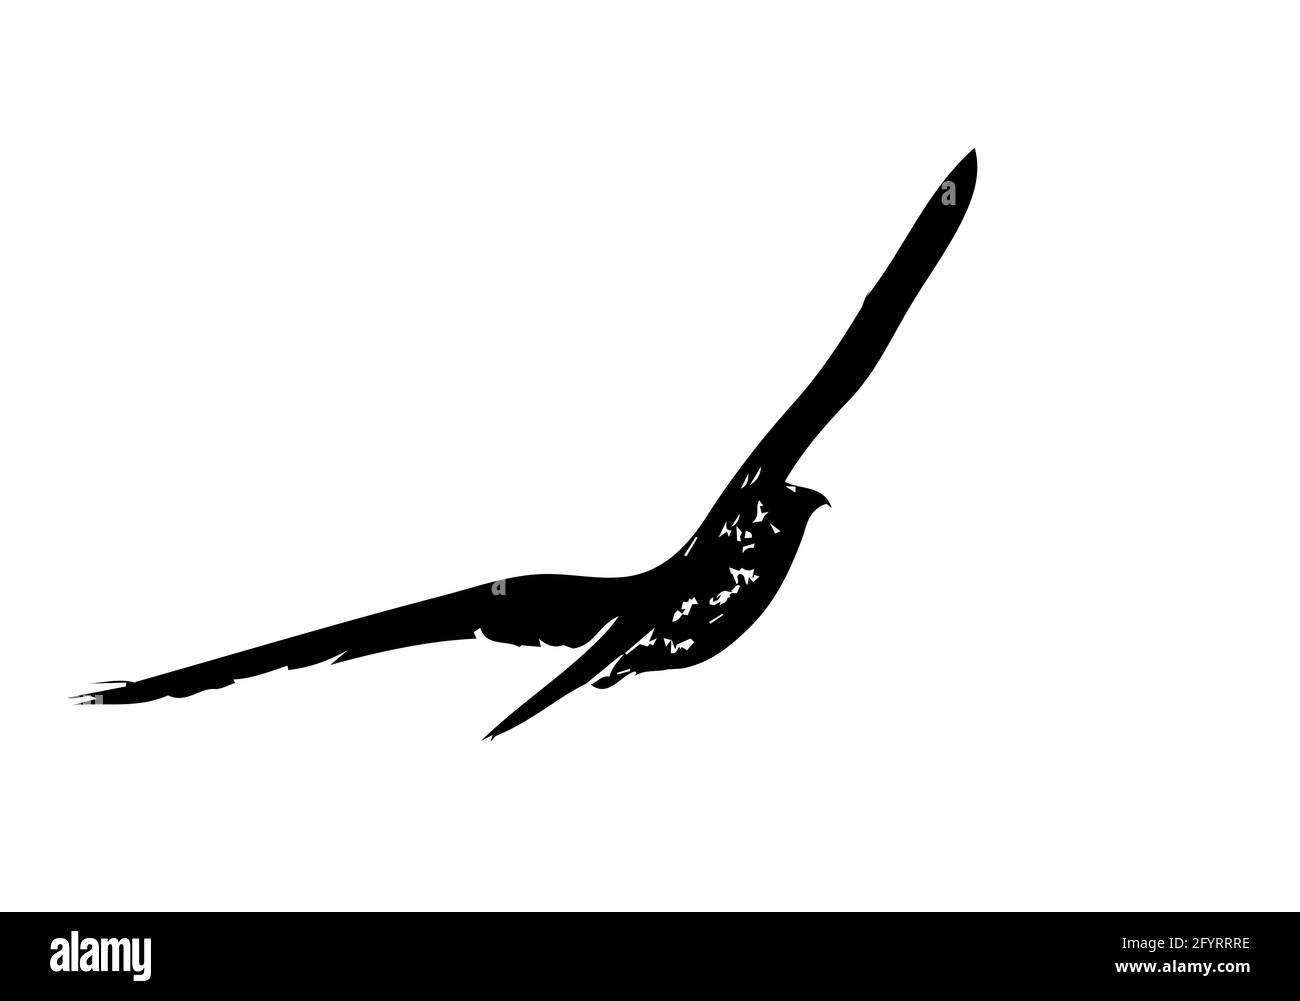 Fliegende Falke schwarze Silhouette auf Weiß Stock Vektor